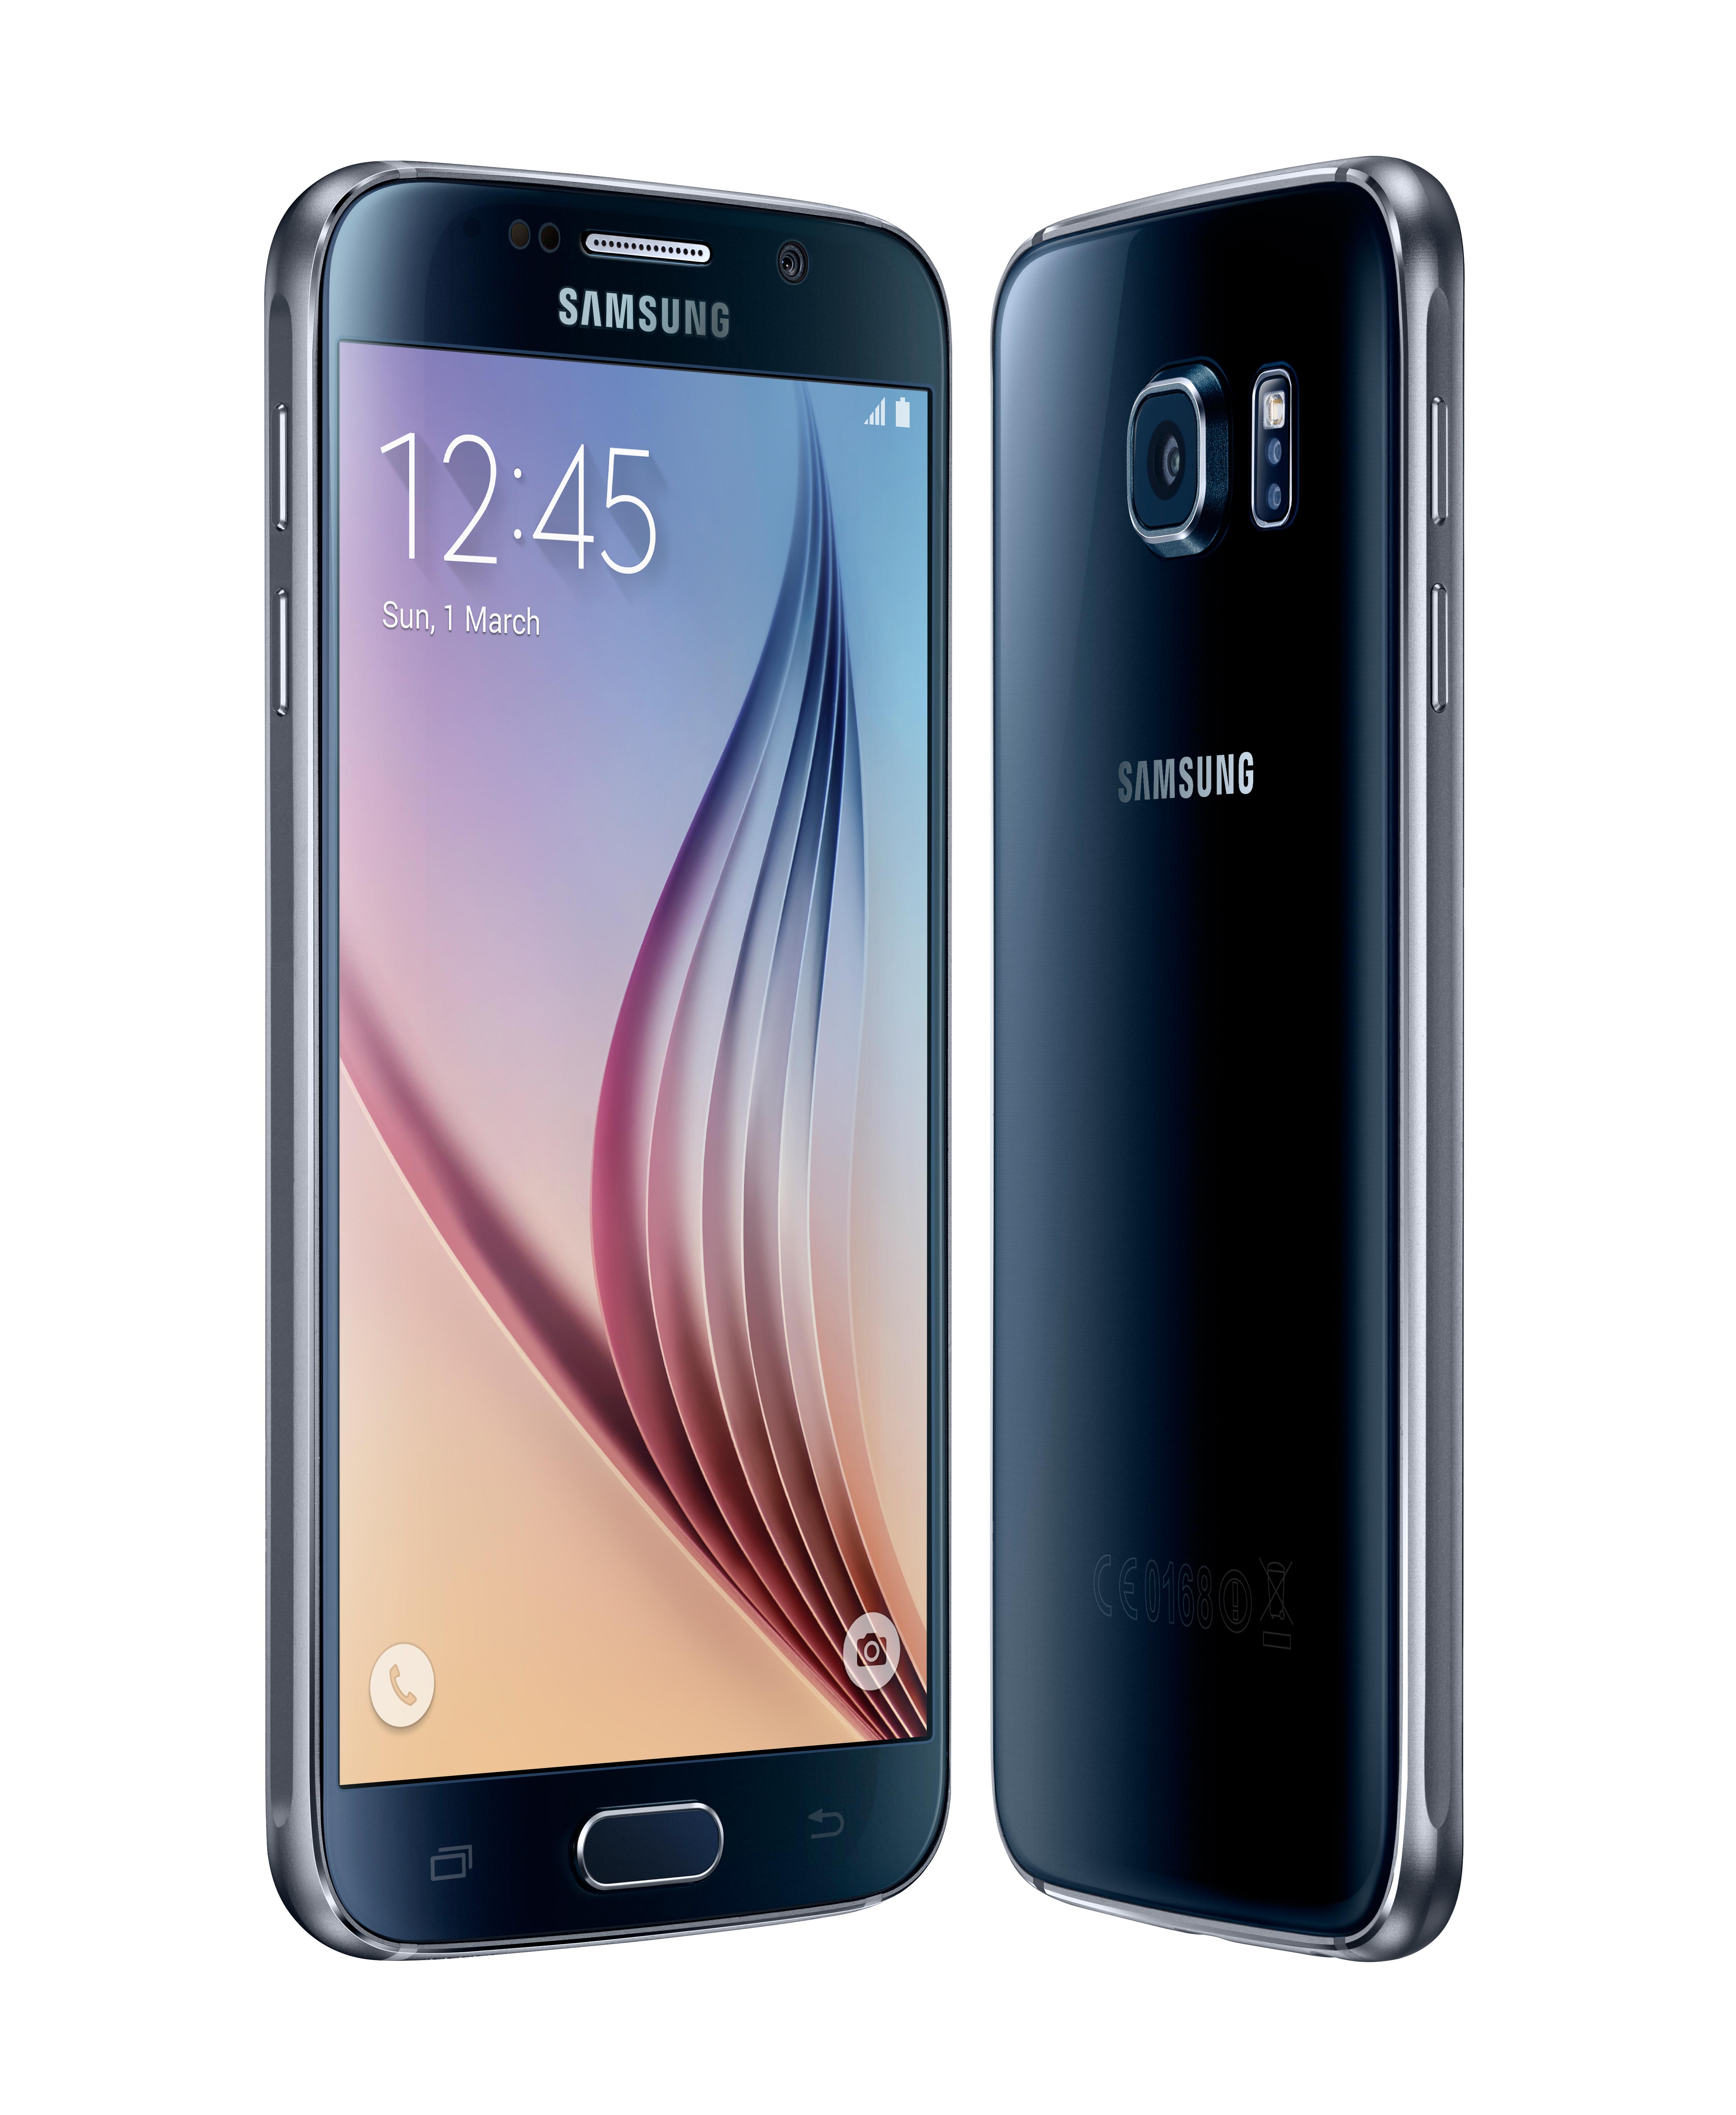 Singtel Samsung Galaxy S6 4g And Galaxy S6 Edge 4g Price Plans Blog Lesterchan Net